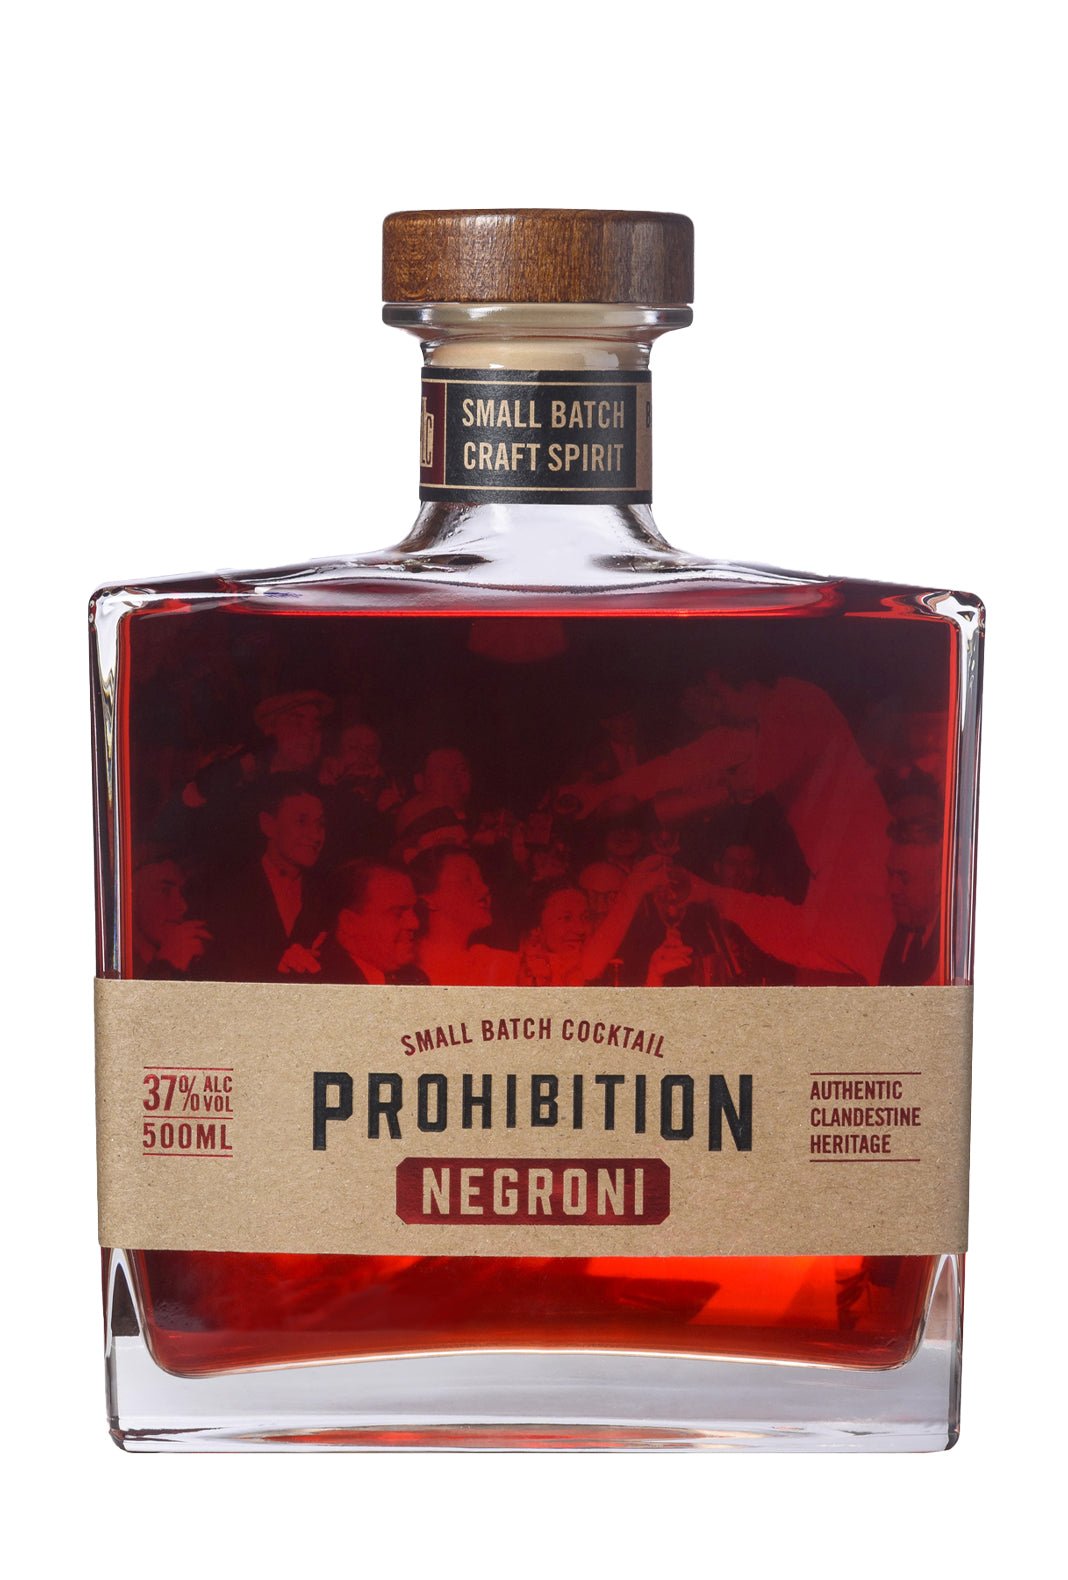 Prohibition Bathtub Cut Negroni 37% 500ml | Gin | Shop online at Spirits of France